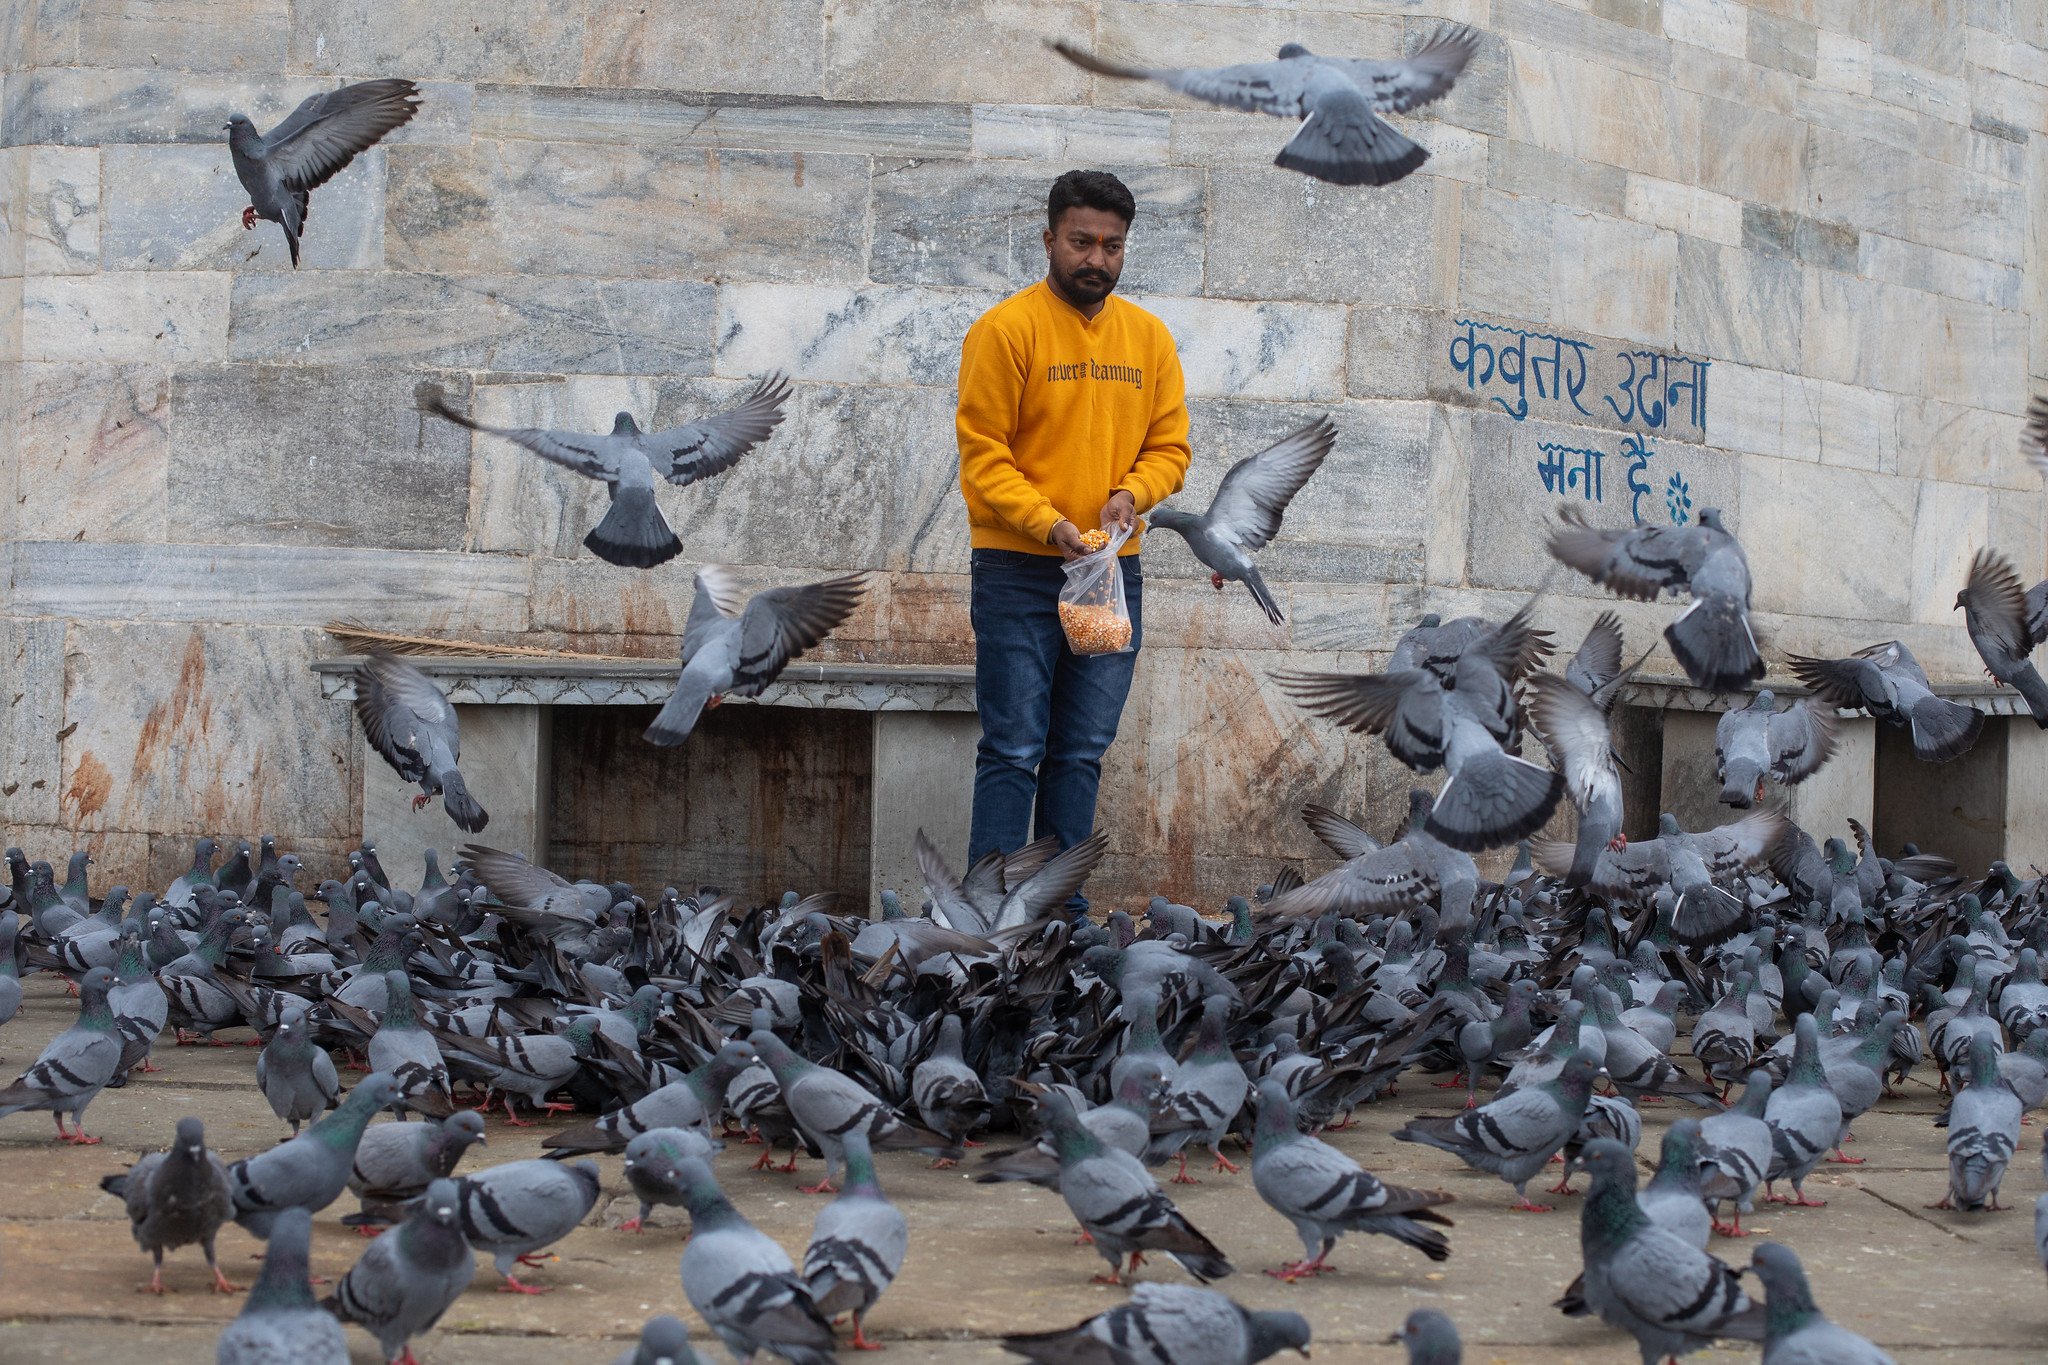 Feeding the Pigeons, Udaipur